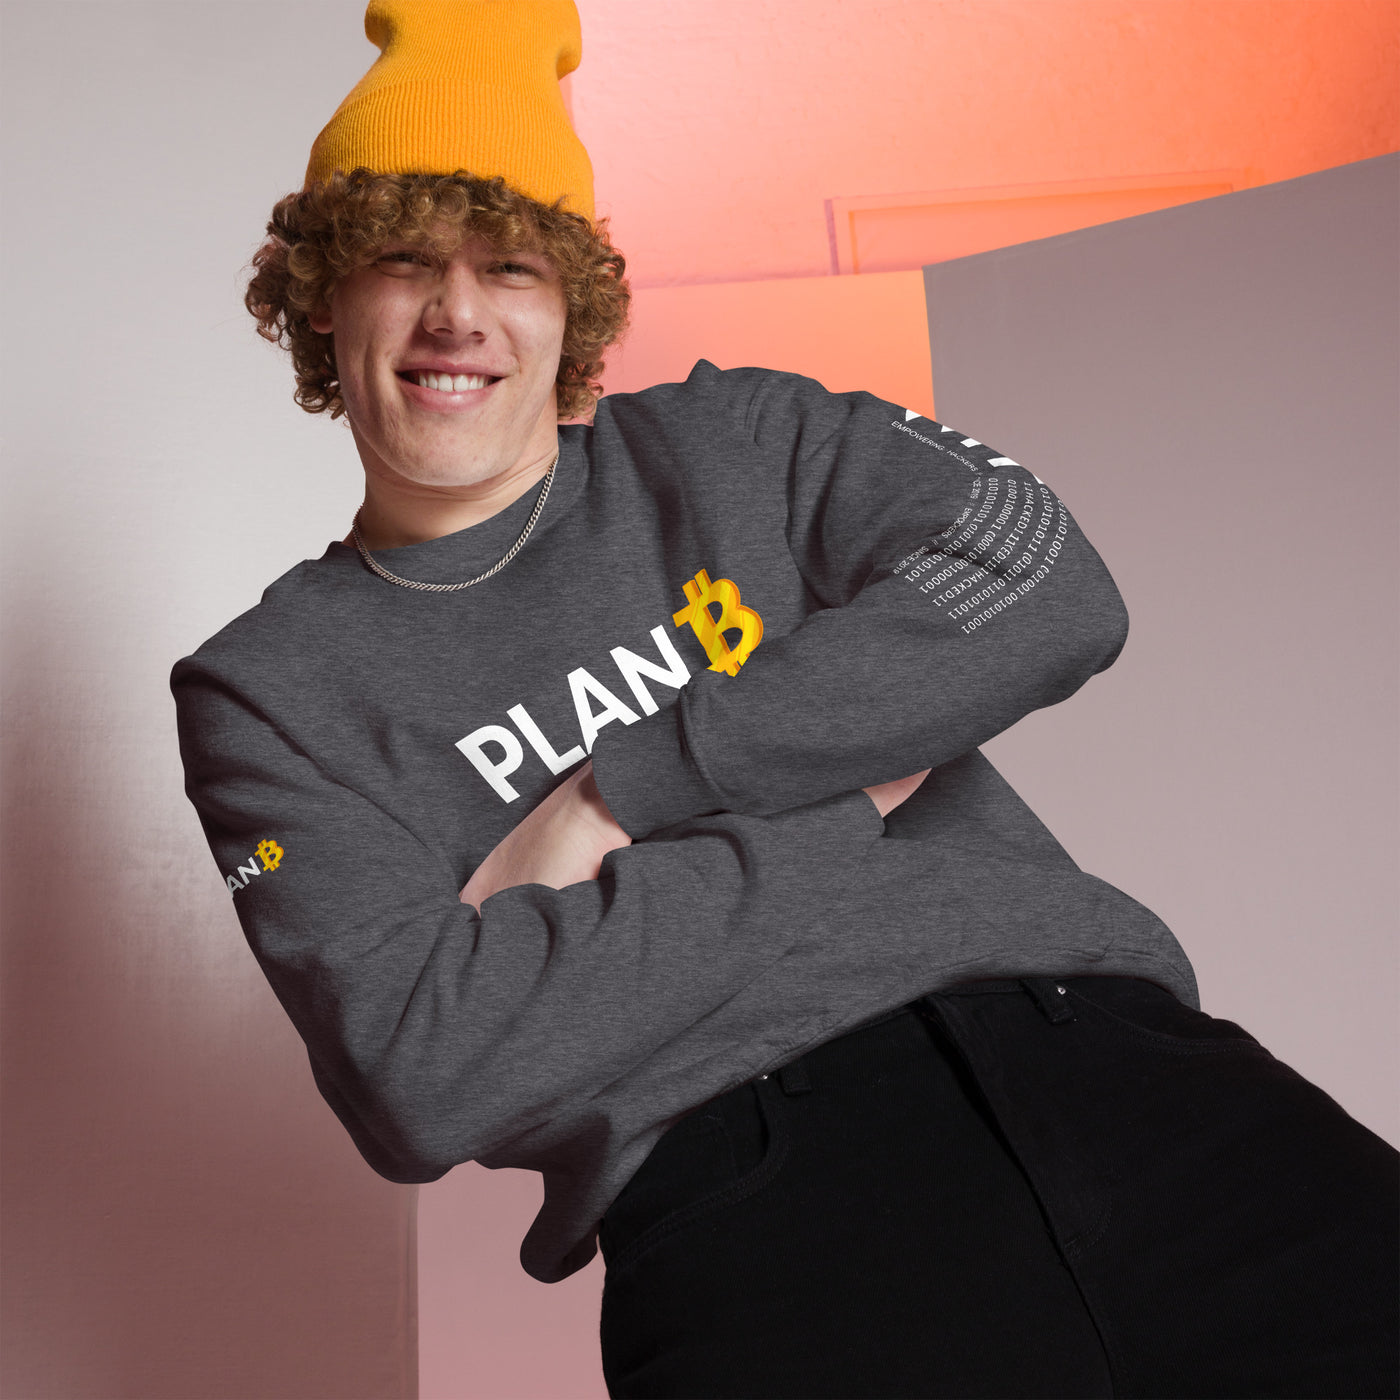 Plan B v1 - Unisex Sweatshirt